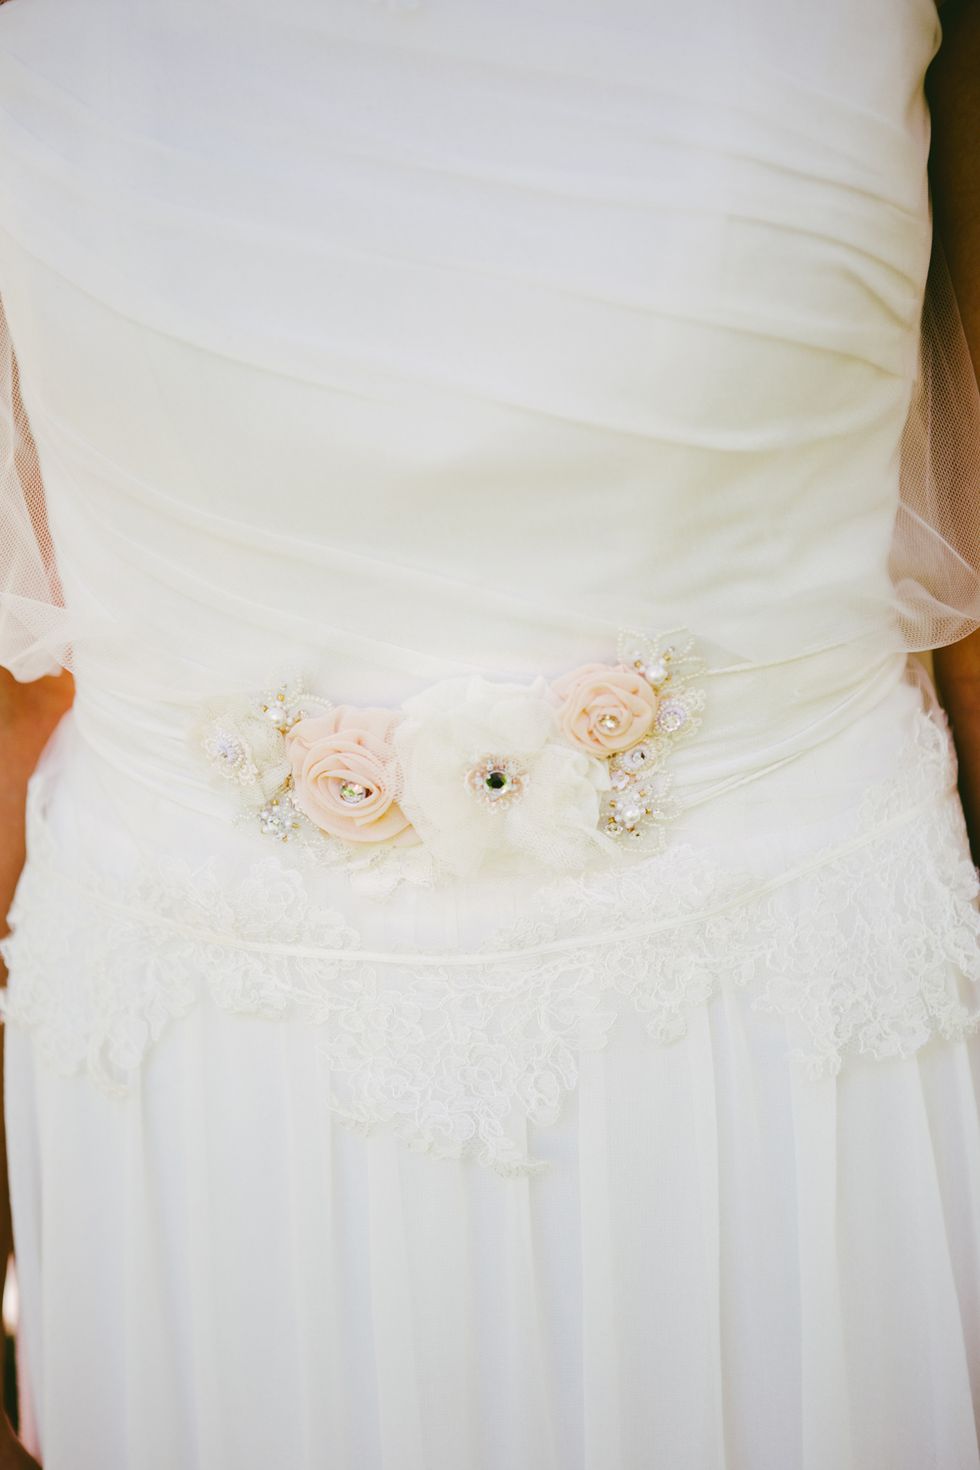 Dress, Textile, White, Wedding dress, Embellishment, Bridal clothing, Bridal accessory, Peach, Day dress, One-piece garment, 